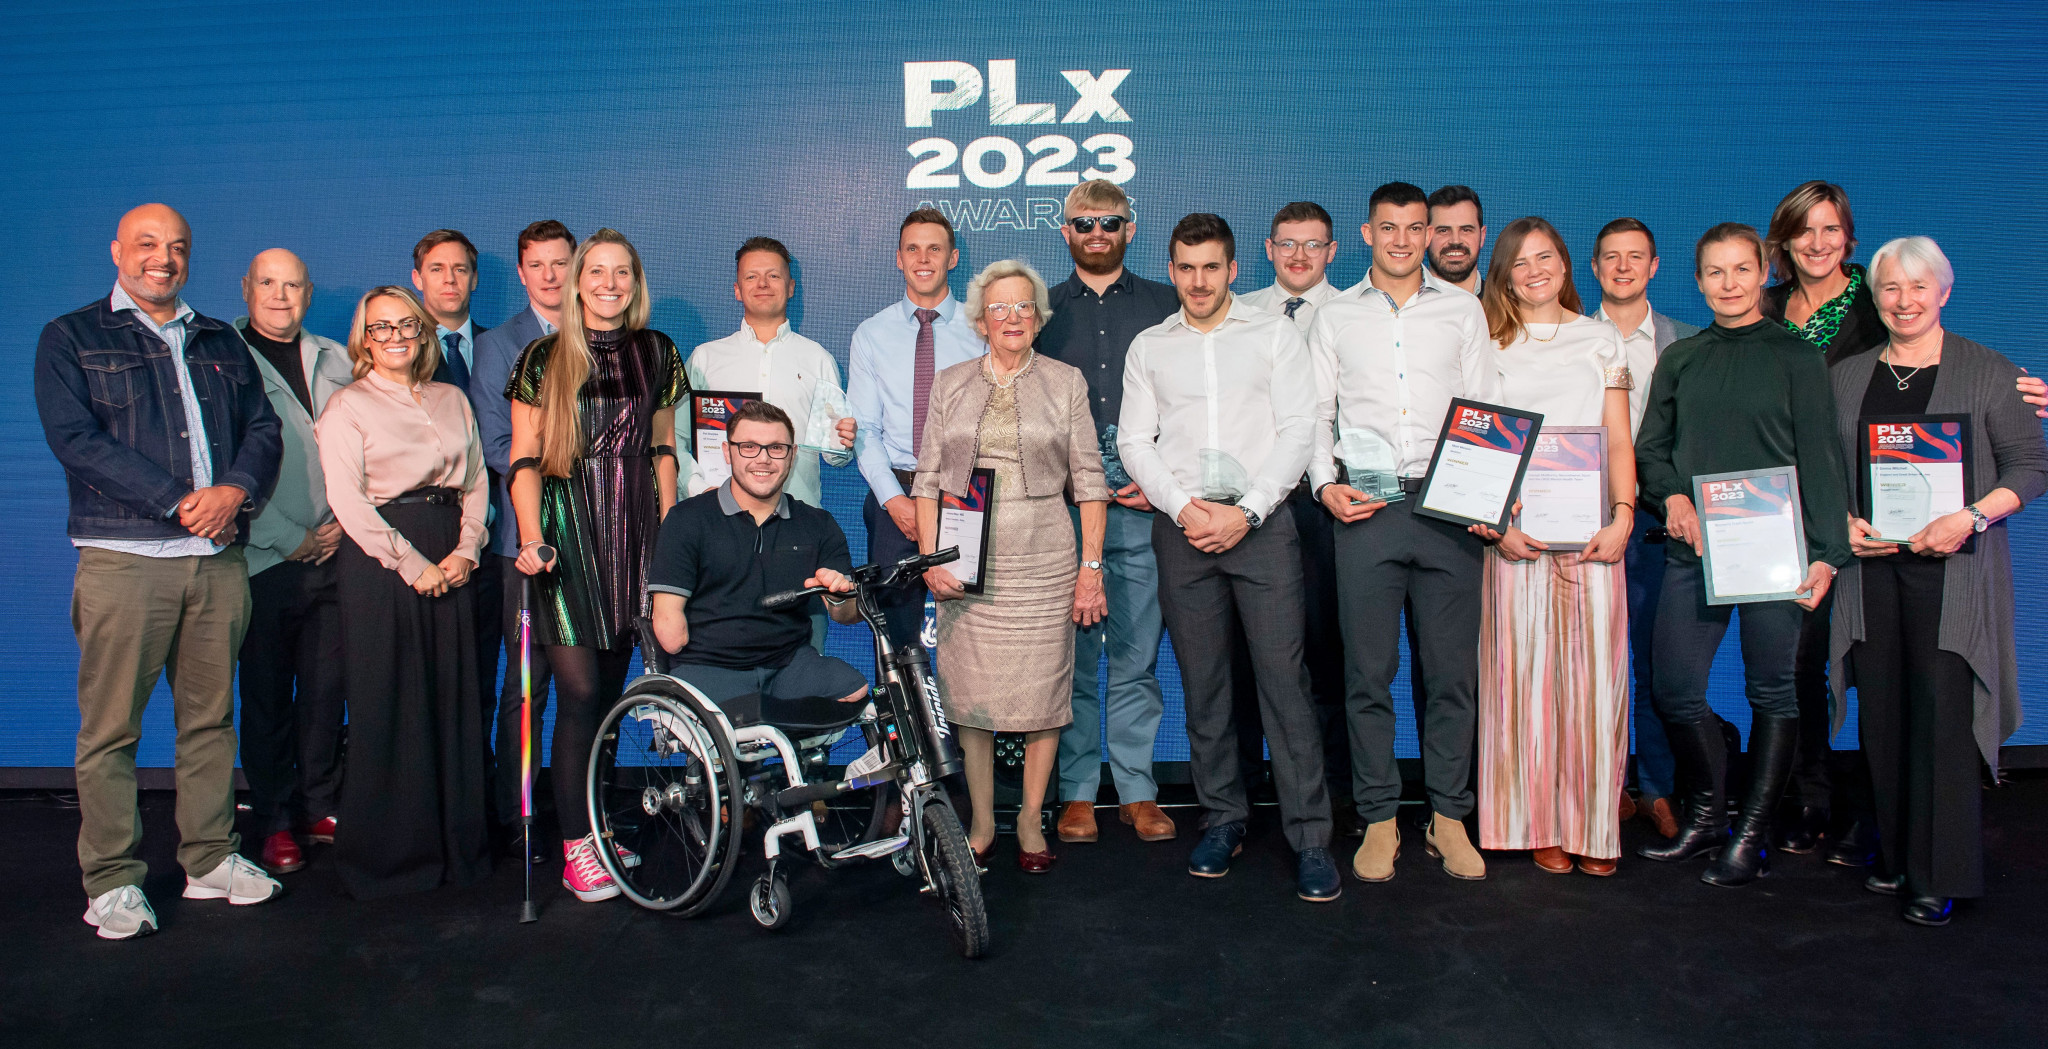 UK Sport High-Performance Sports Award winners were announced